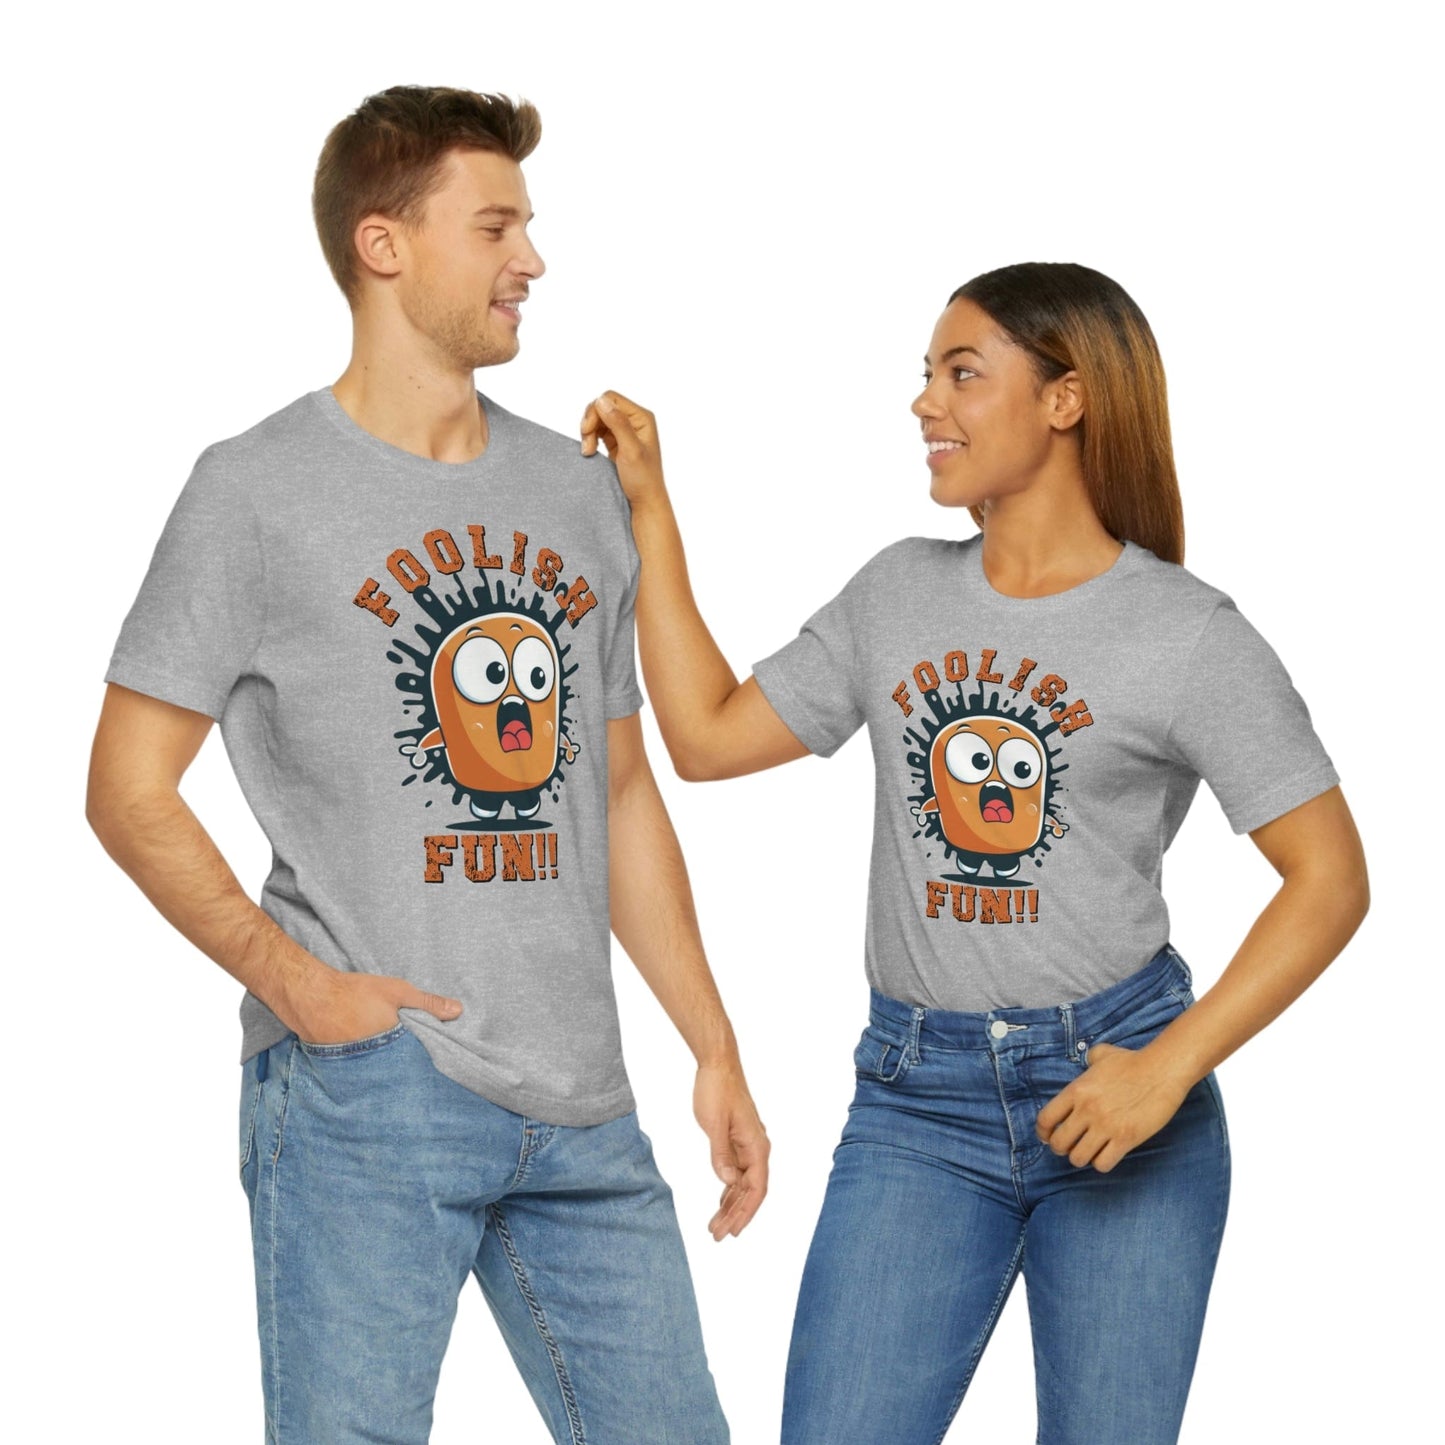 2023 Unisex Foolilsh Fun Prankster Lover Squad pranks Quote April Fool's Day Joke Humor Comedy Sayings Sarcastic T-Shirt